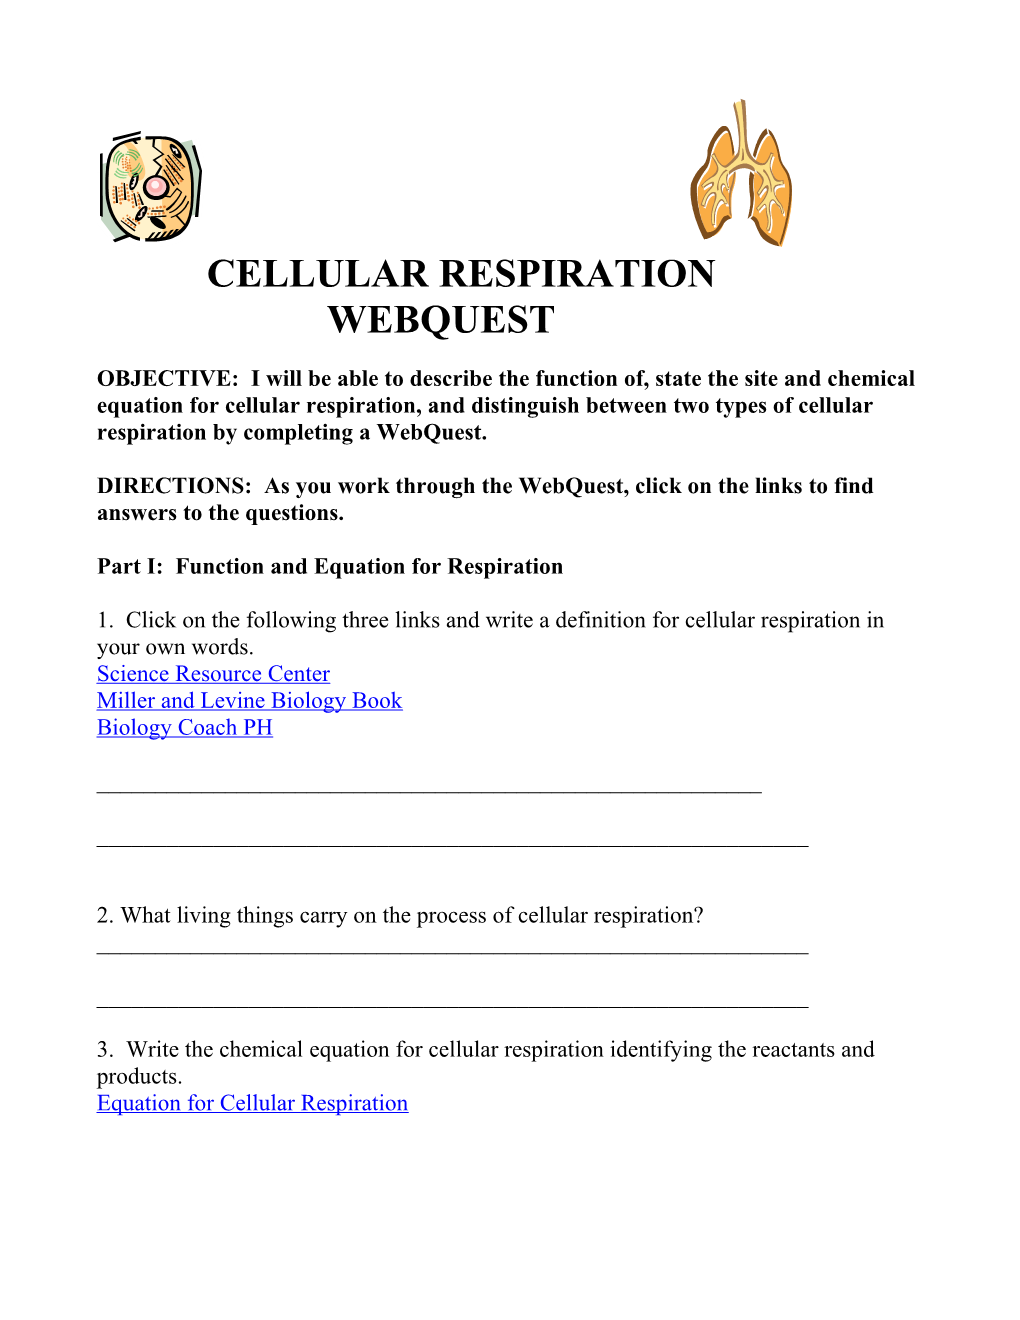 Cellular Respiration s2